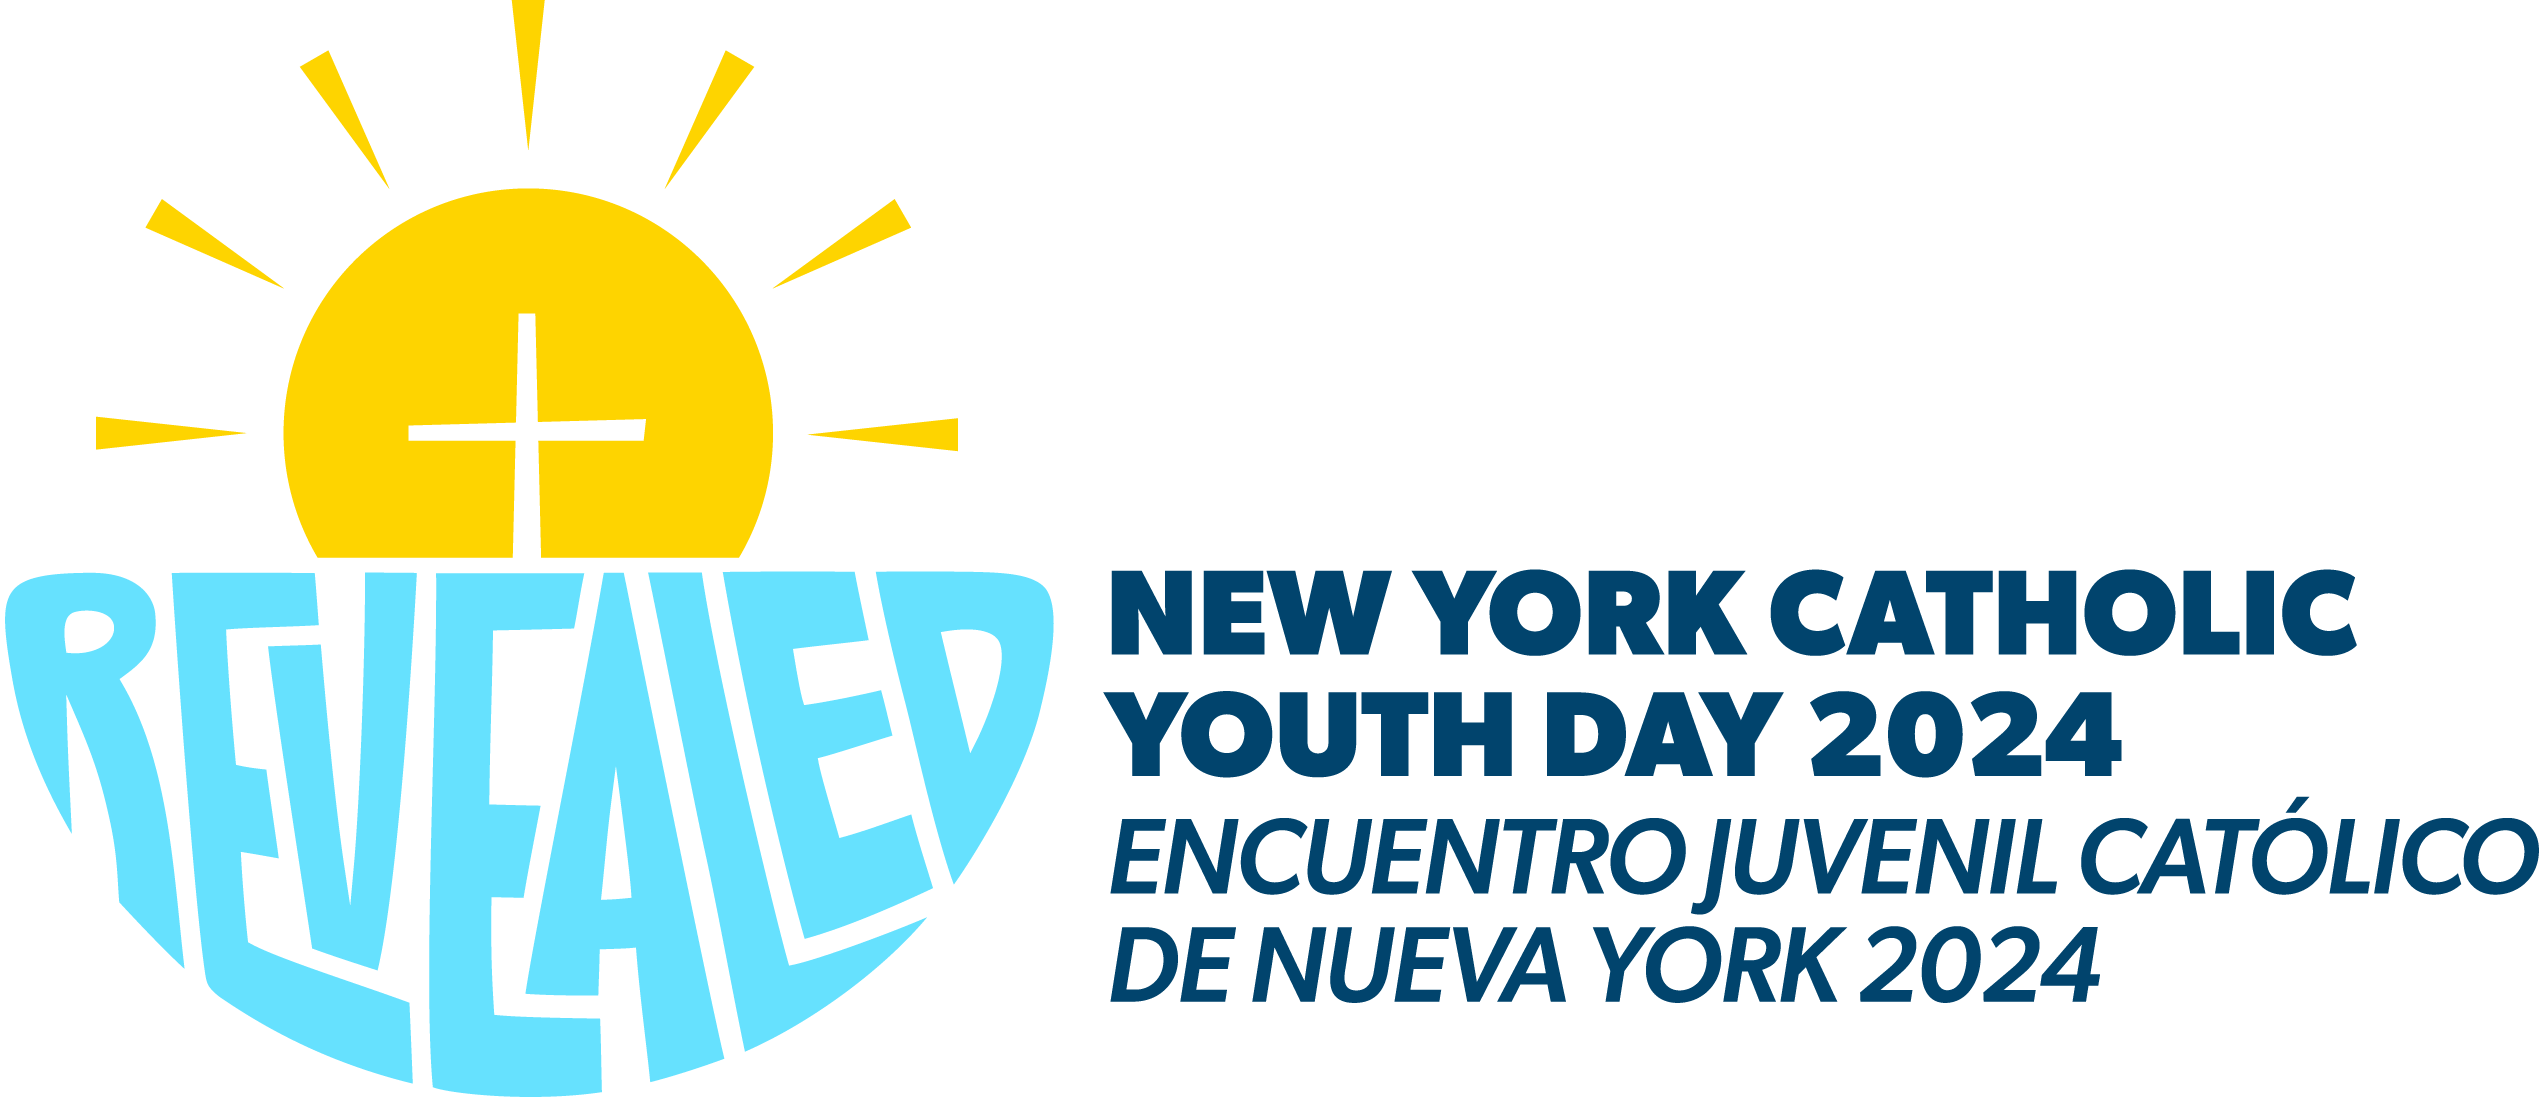 New York Catholic Youth Day 2024/ Encuentro Juvenil Católico de Nueva